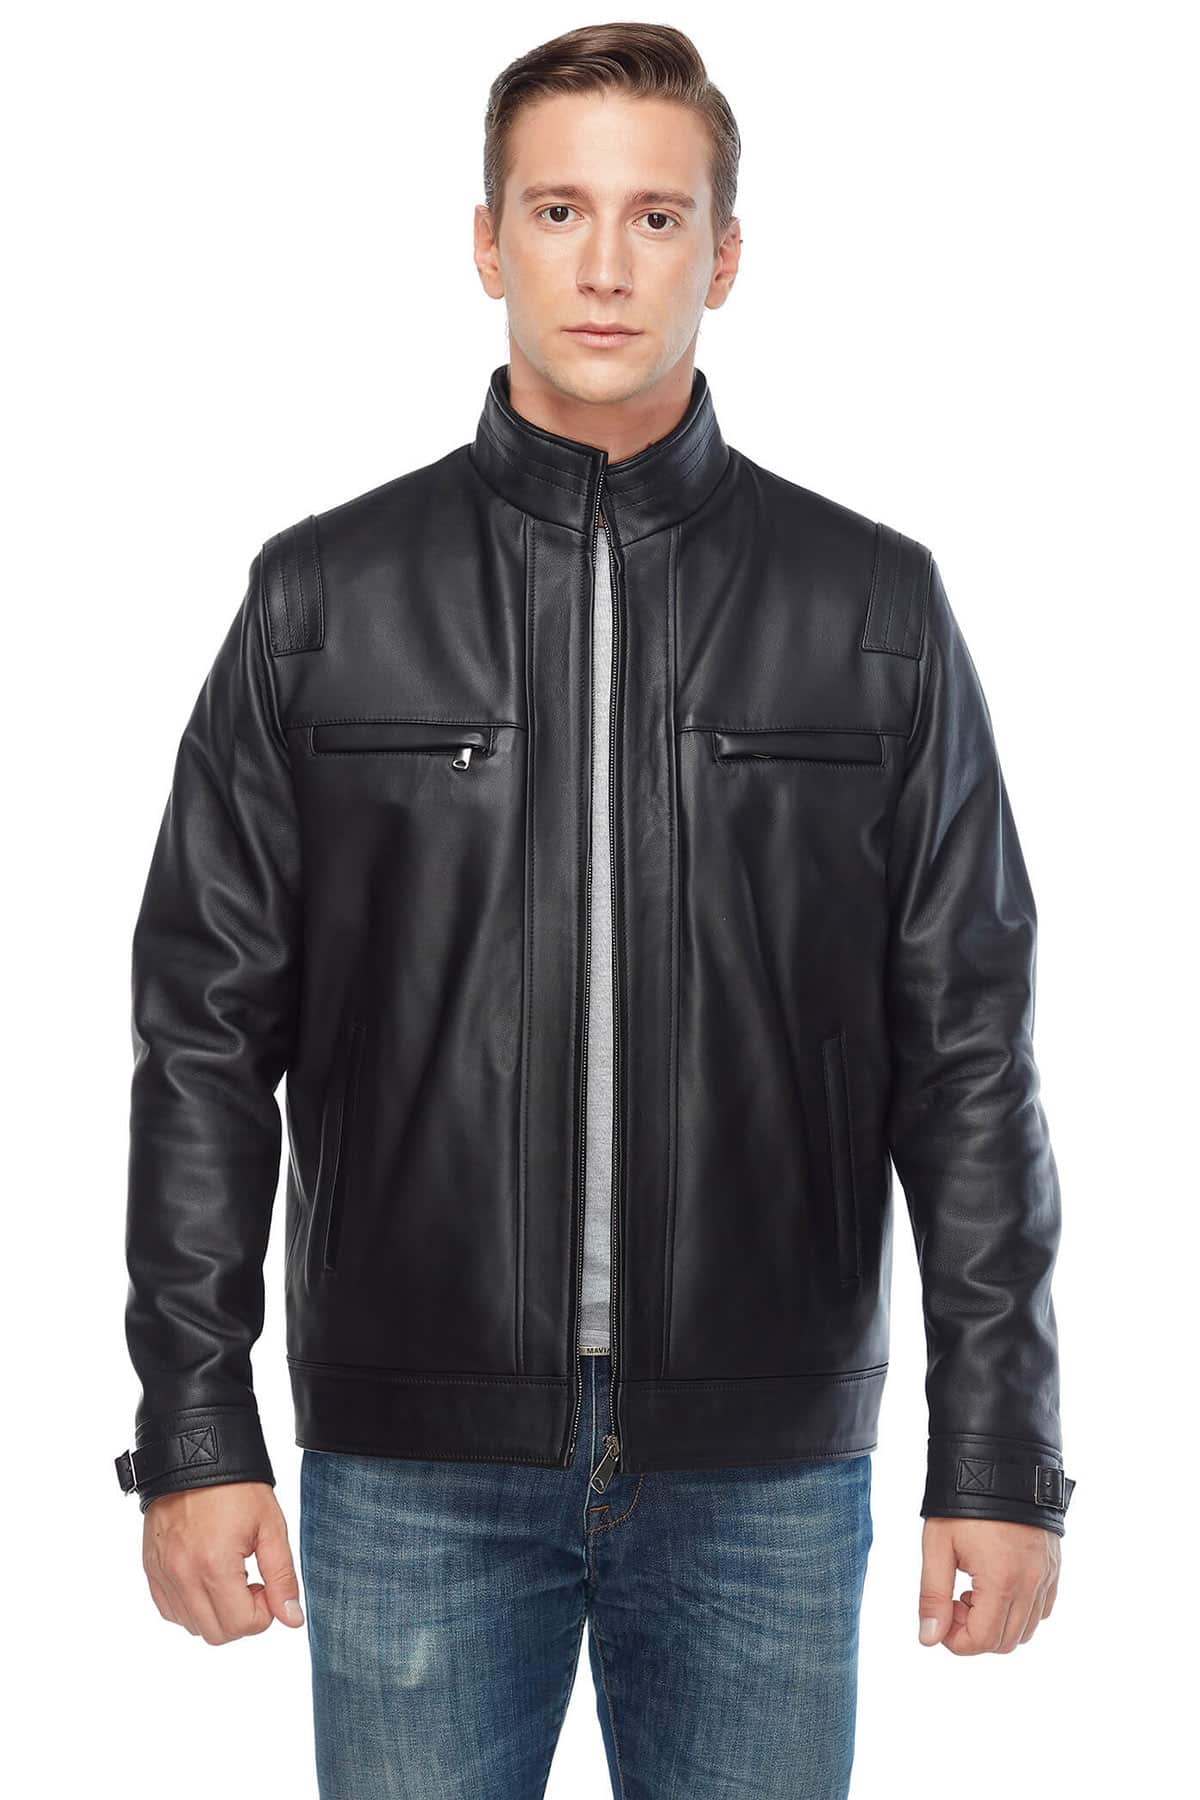 Jesse Wood Men's 100 % Real Black Leather Jacket